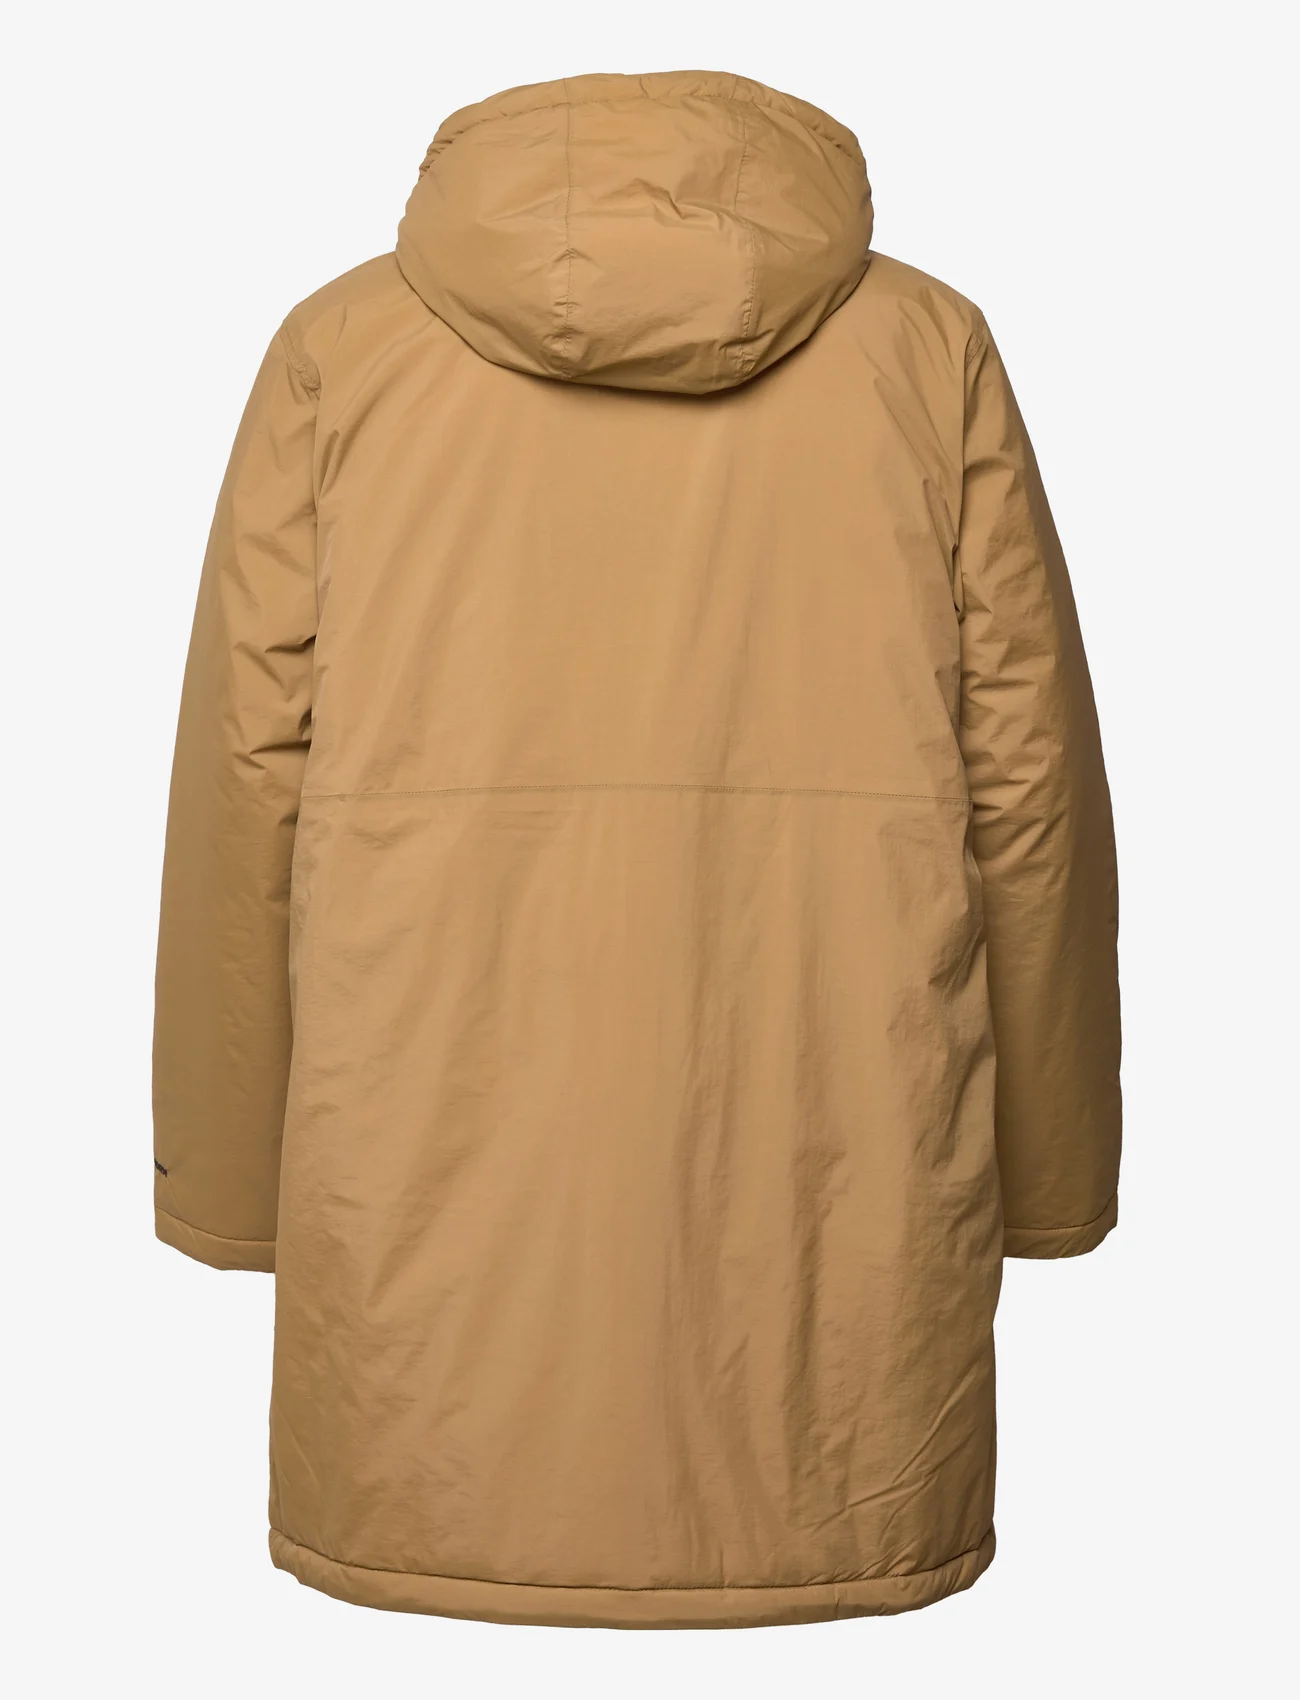 Tretorn - LIGHT PADDED SHELL PARKA - winter jackets - 609 ermine - 1